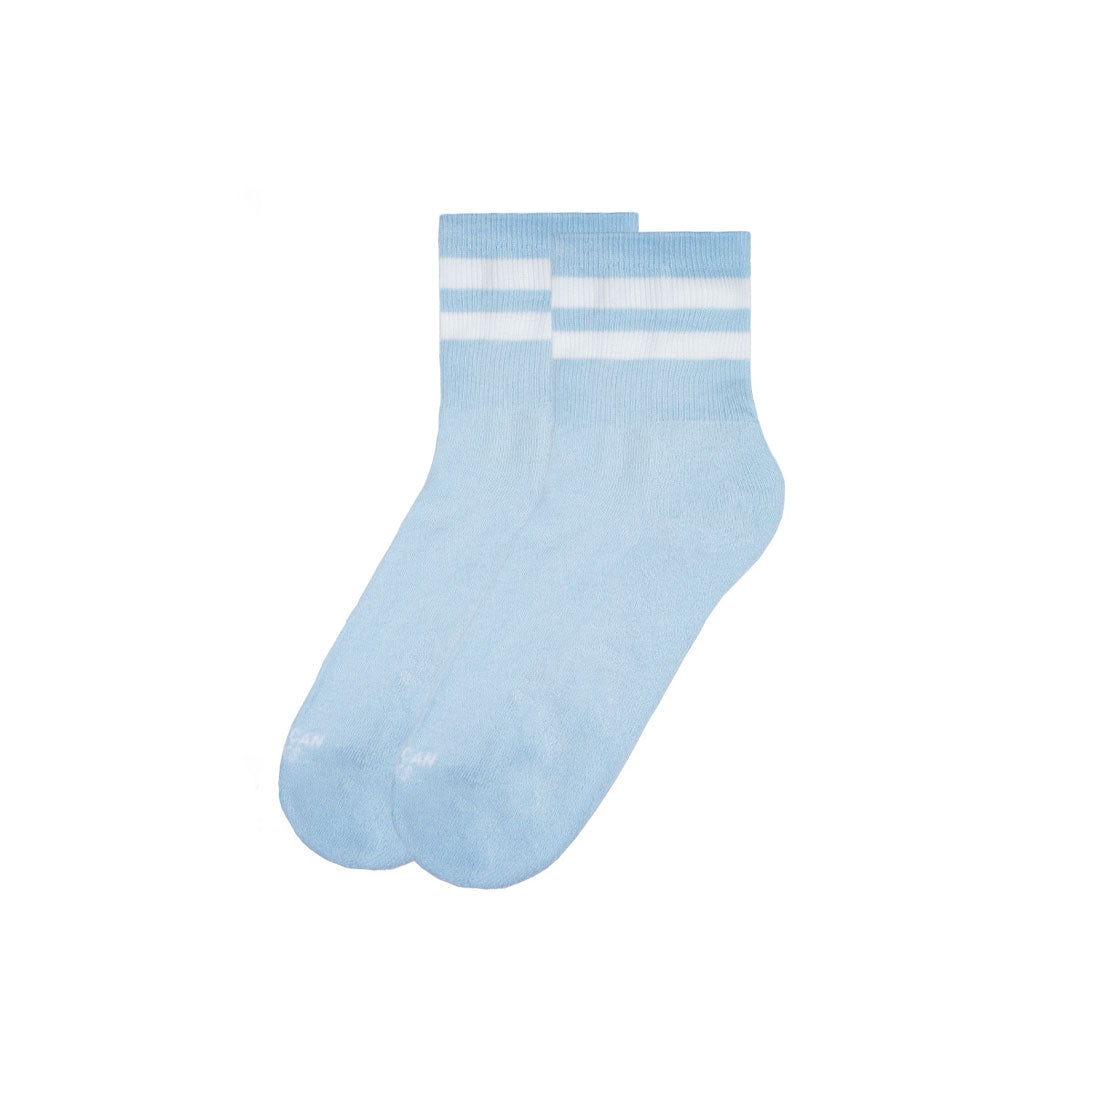 American Socks Classic - Bali - Ankle High Apparel Socks